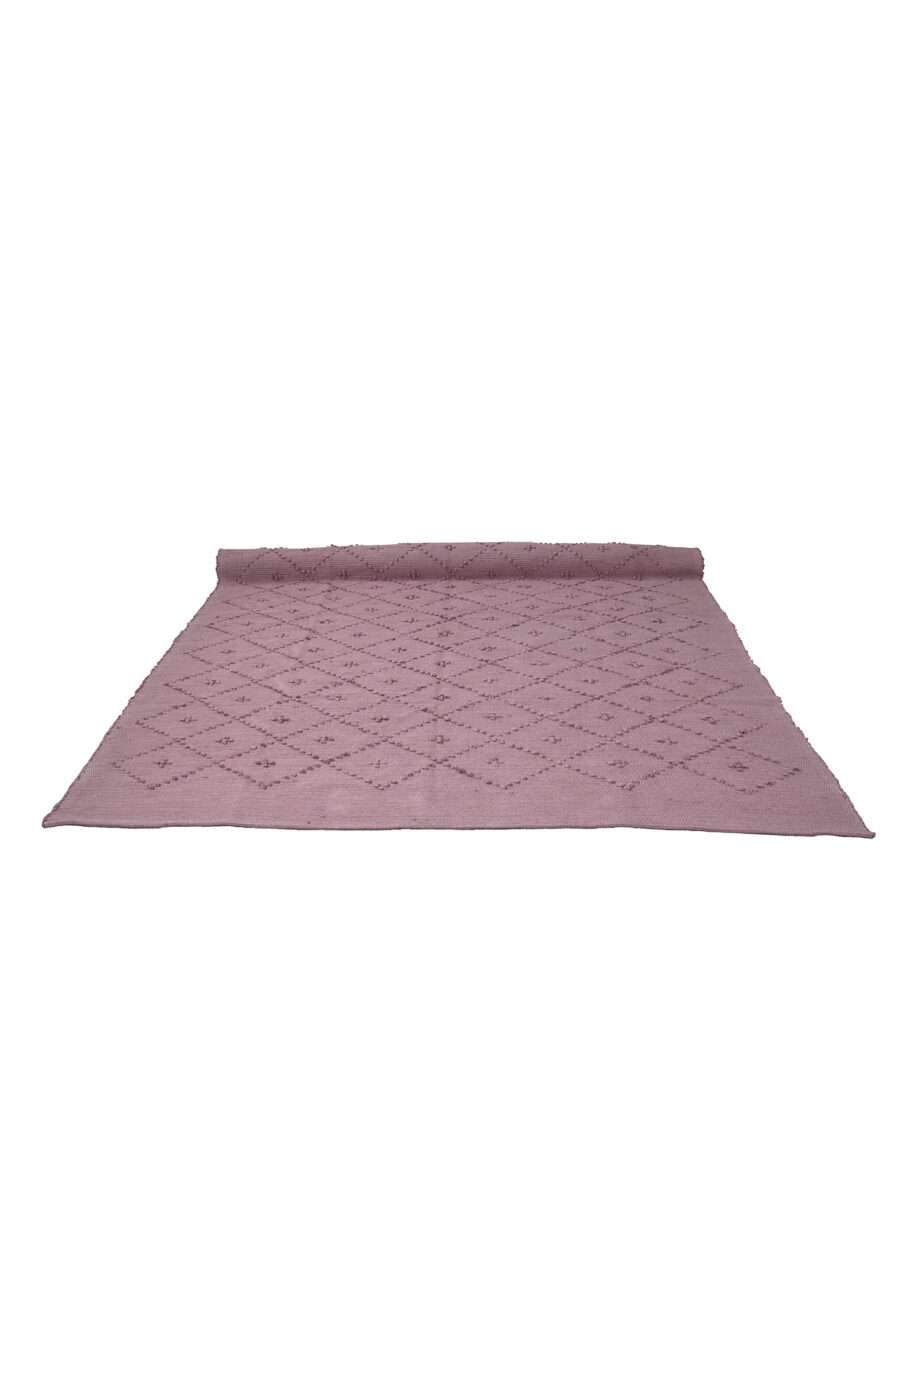 diamond violet woven cotton rug xlarge